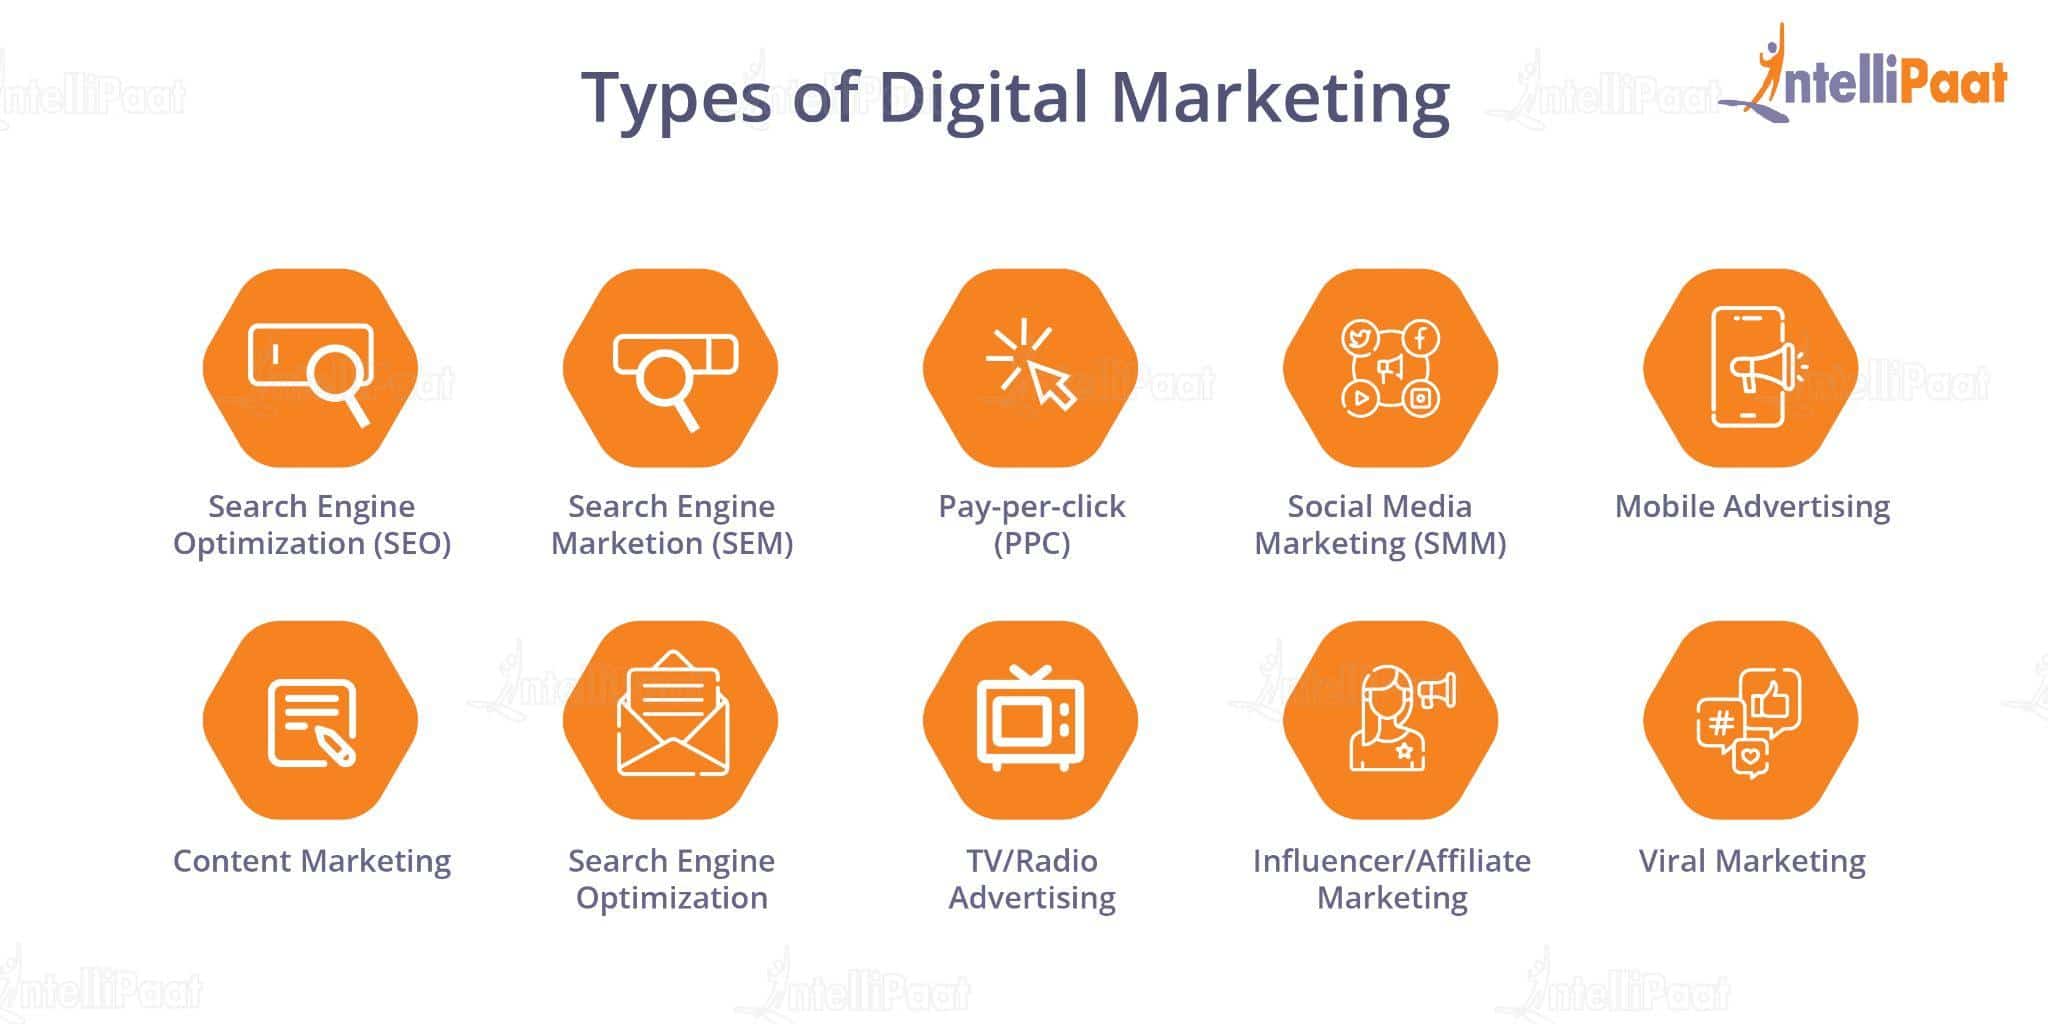 Different Types of Digital Marketing